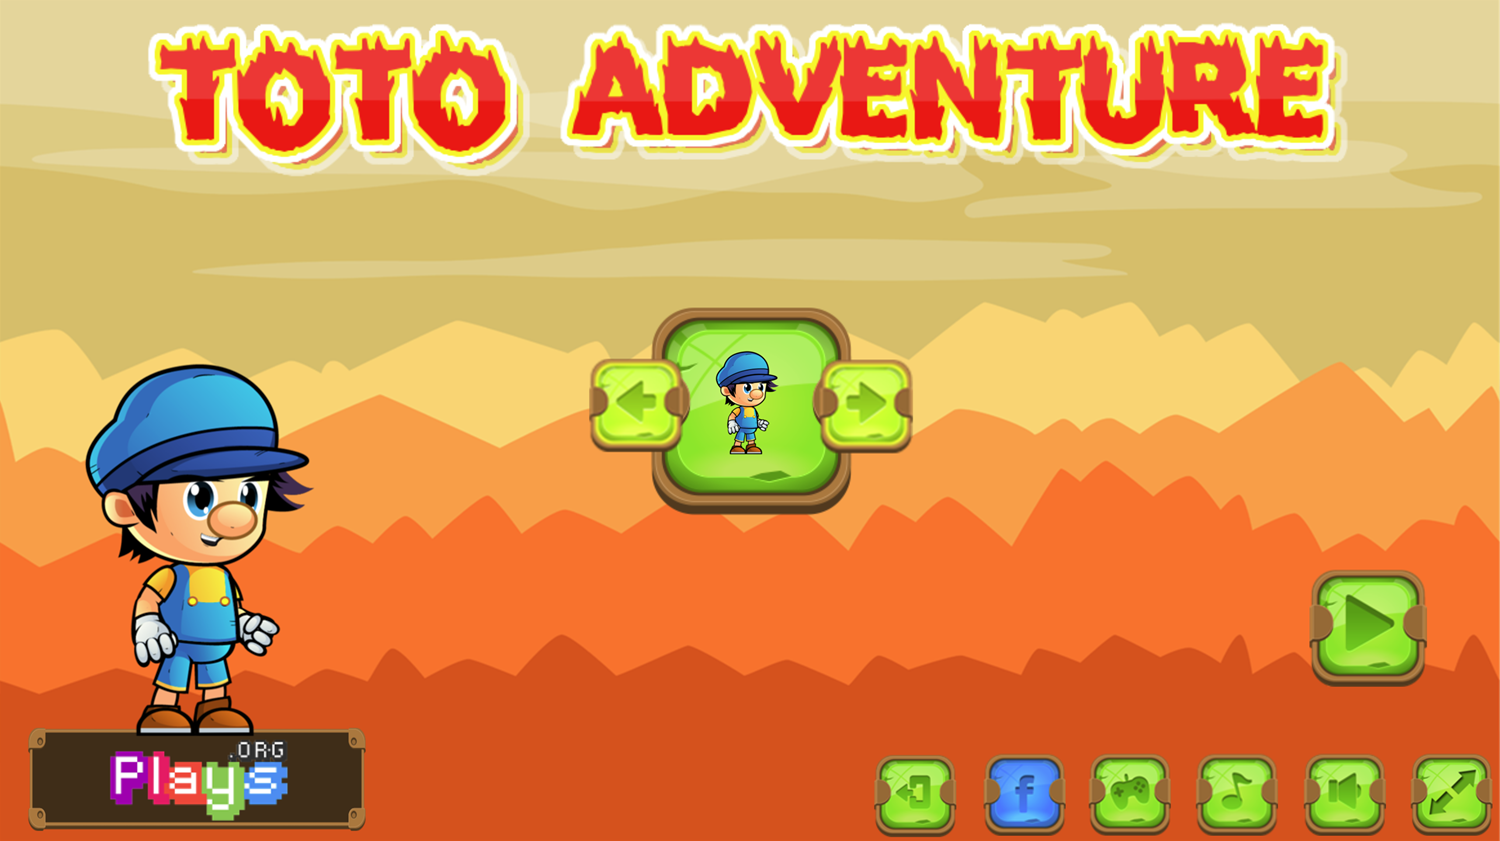 Toto Adventure Game Welcome Screen Screenshot.